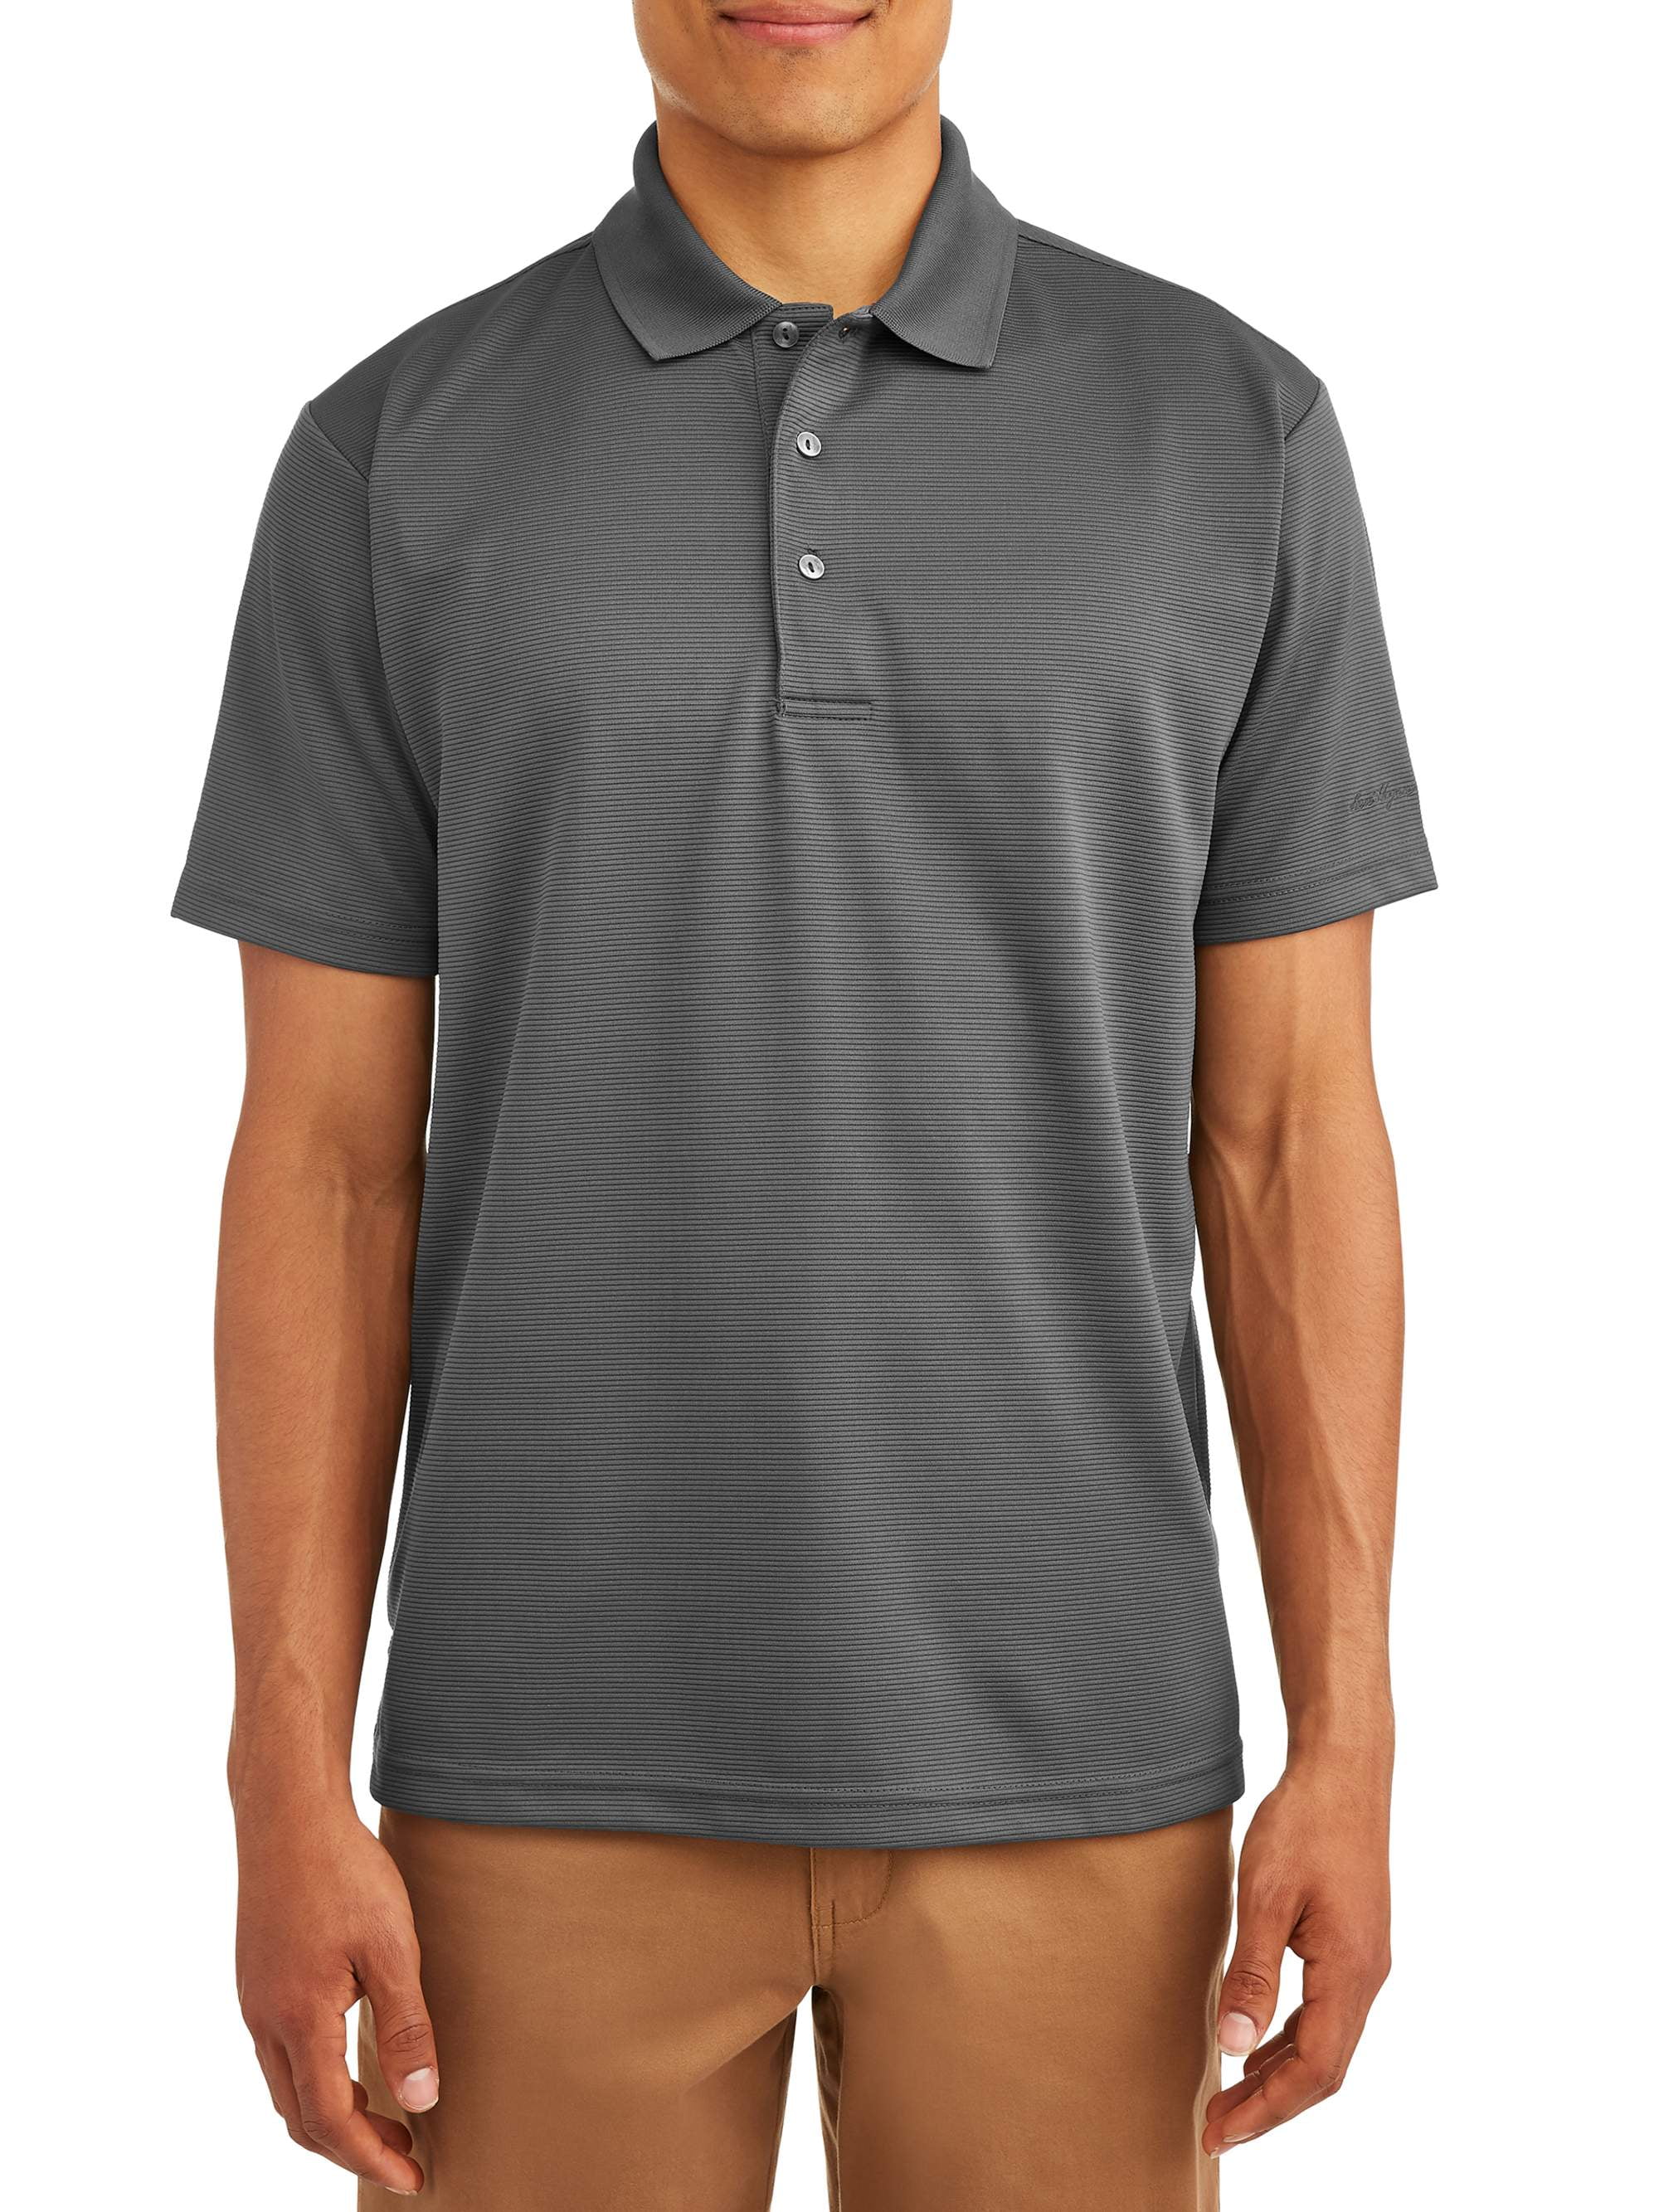 Ben Hogan Men's & Big Men's Performance Easy Care Solid Short Sleeve Polo Shirt, up to 5XL